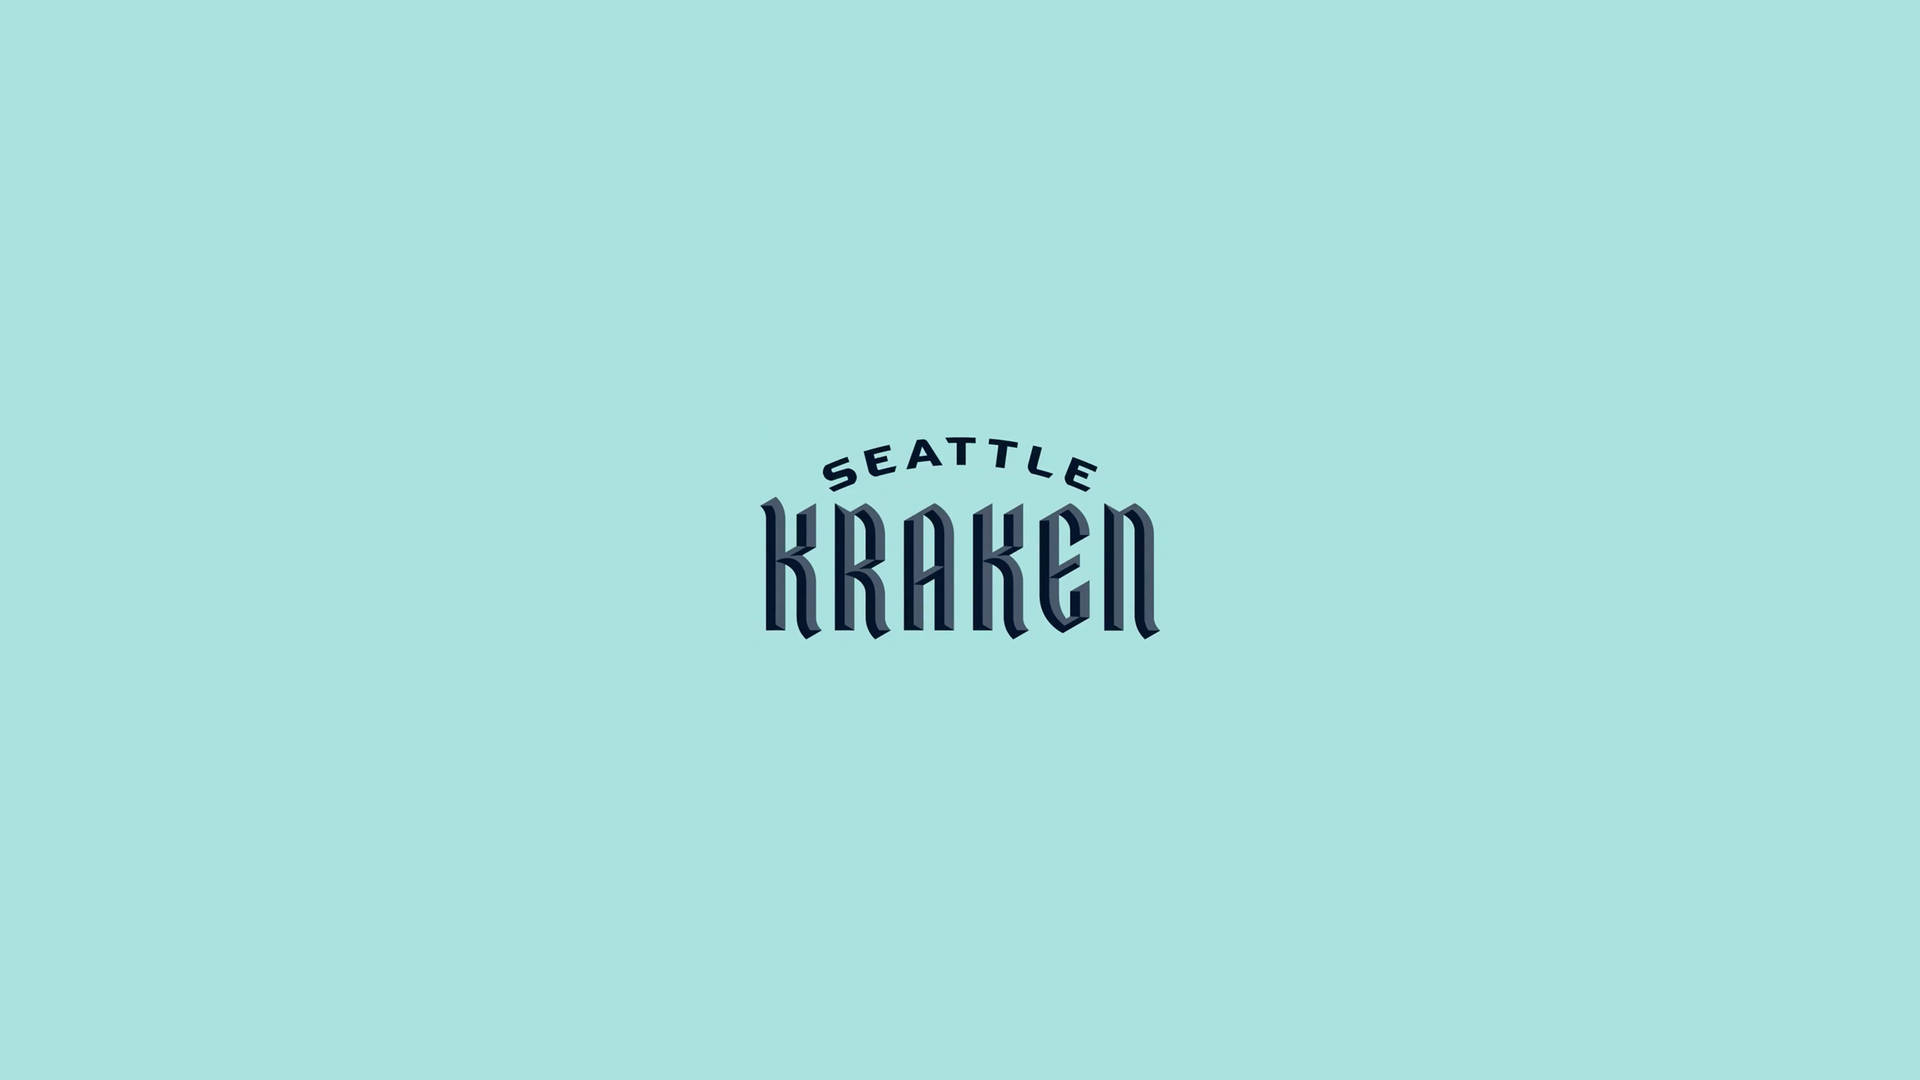 Seattle Kraken Wordmark Lettering Background